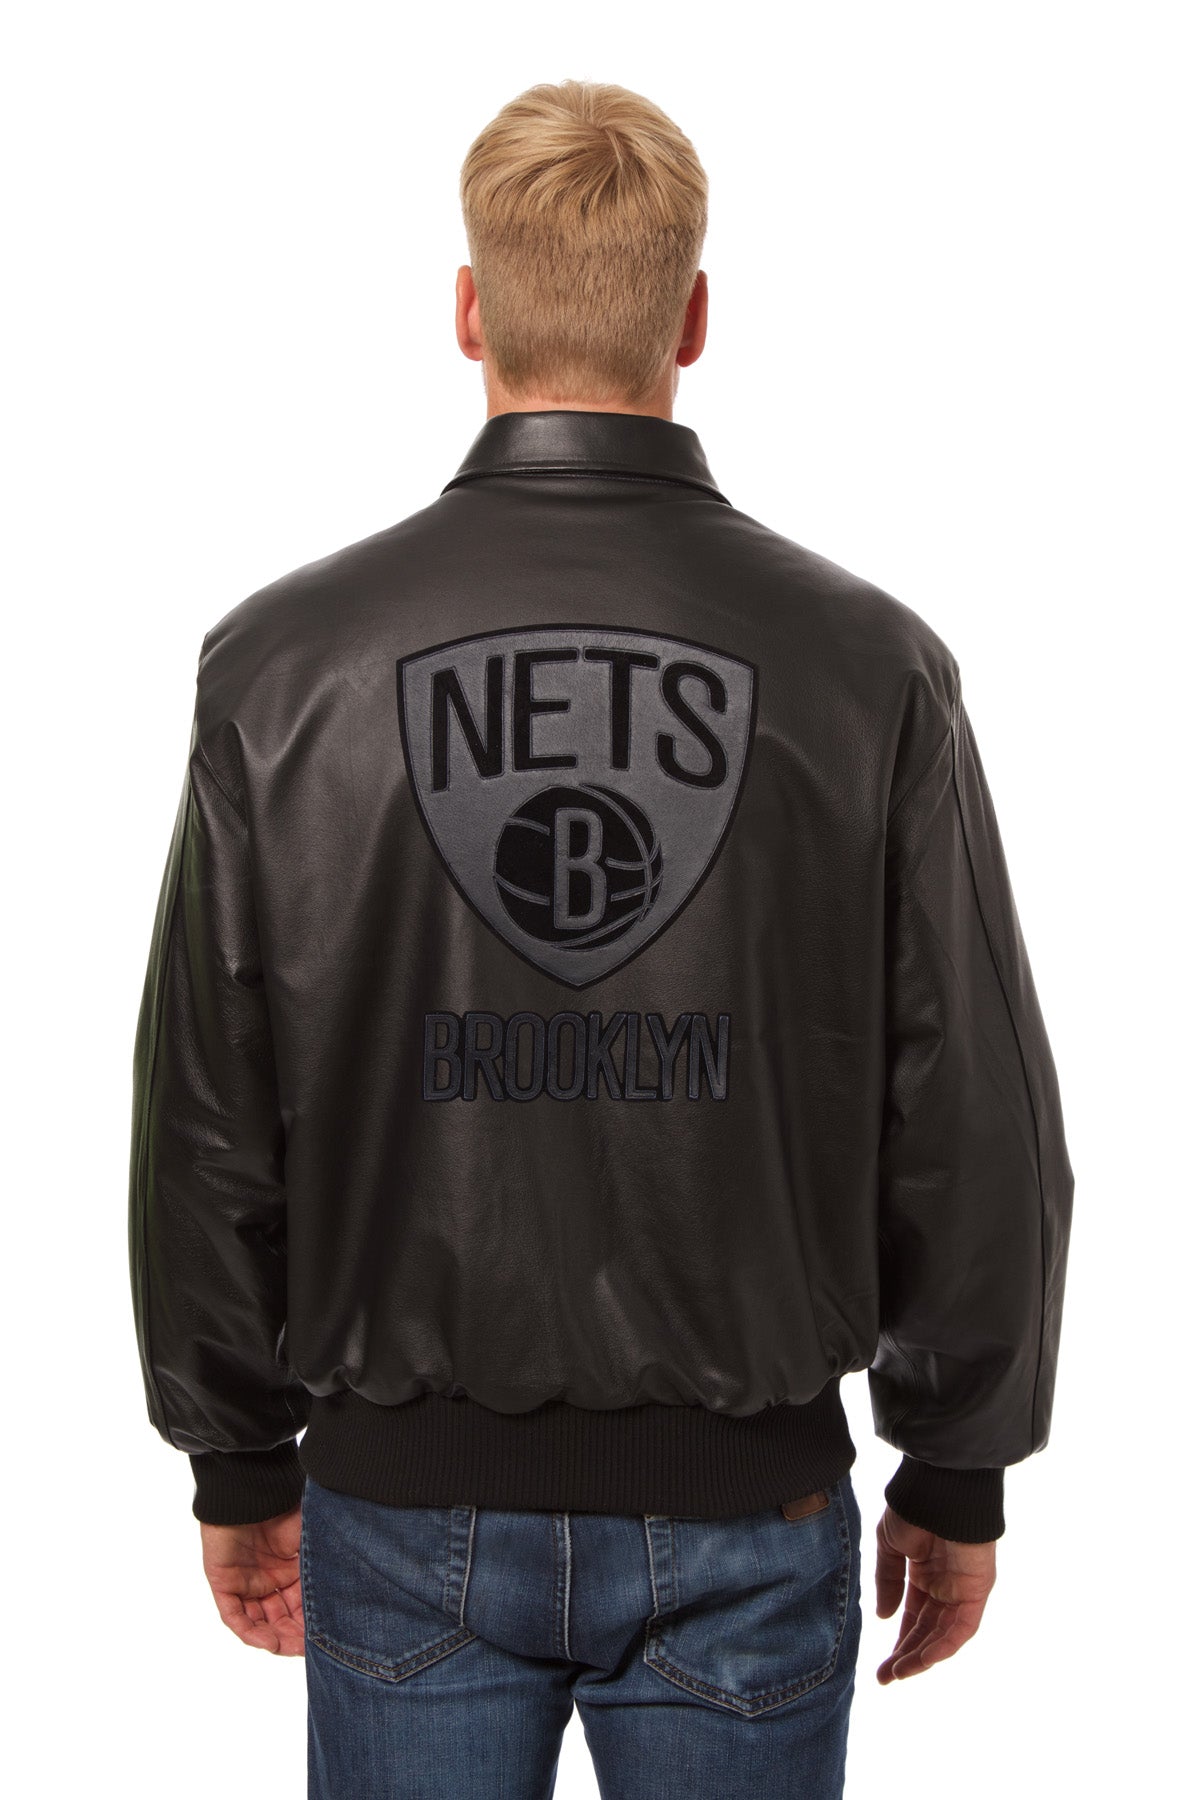 brooklyn nets leather jacket